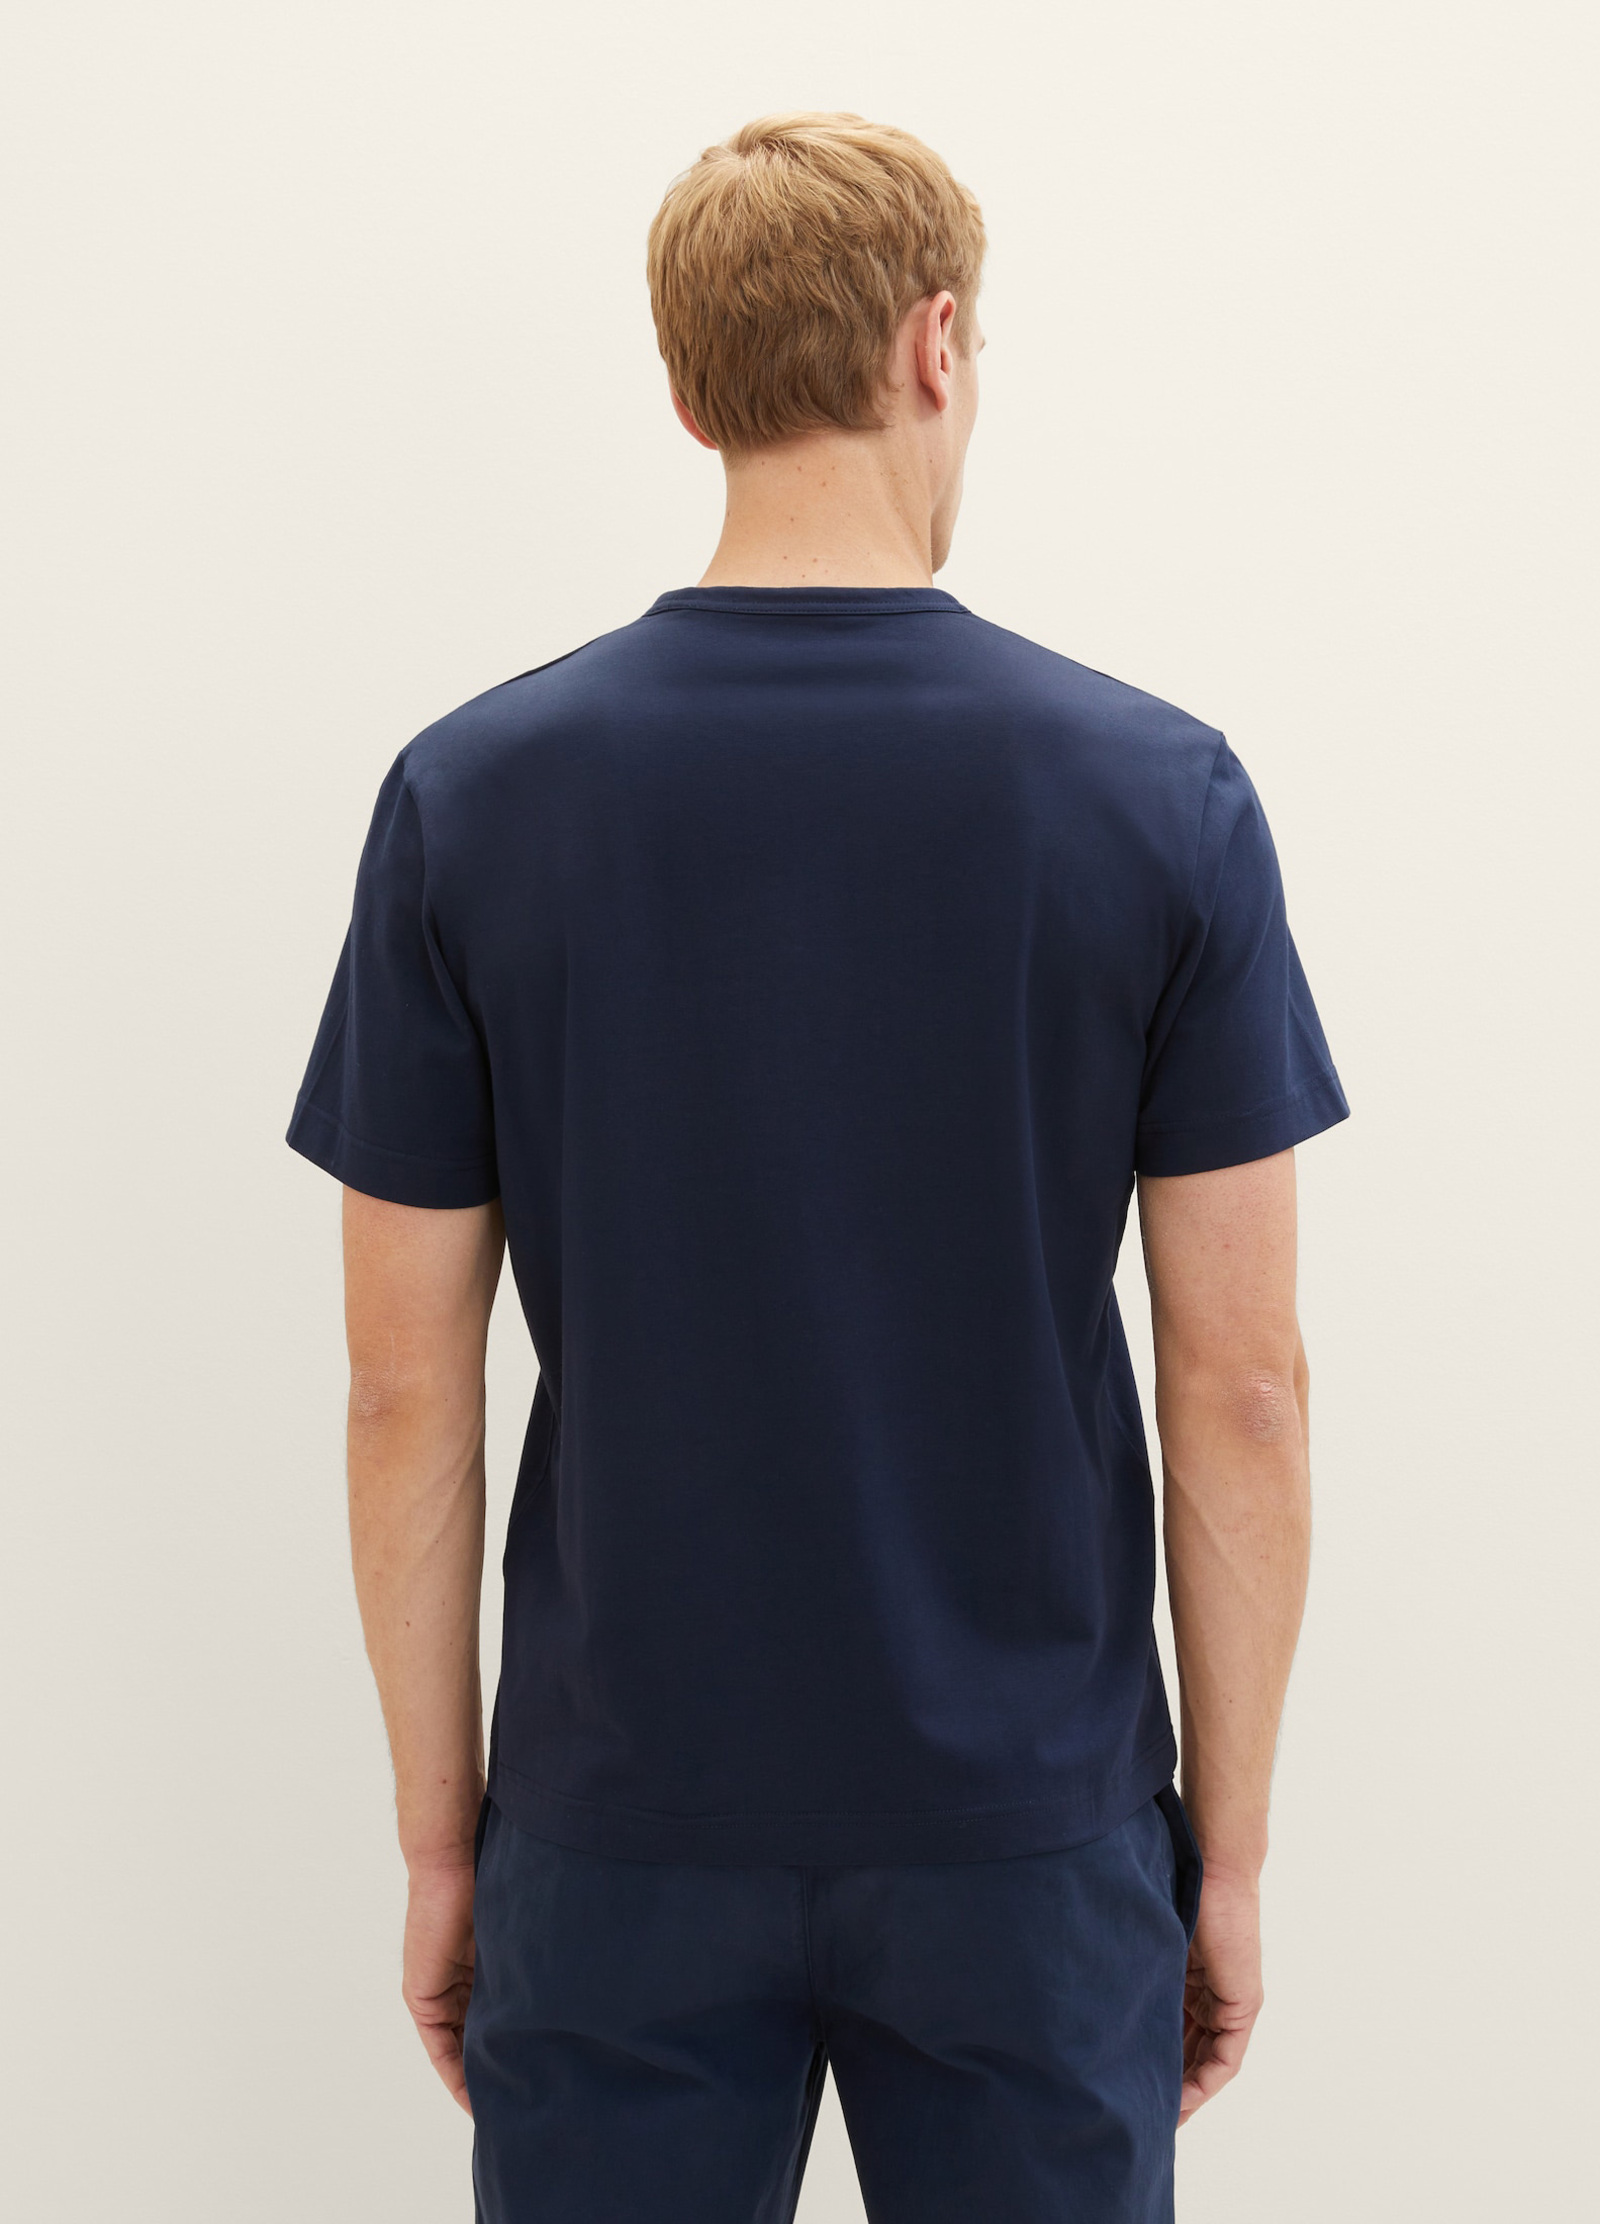 Tailor Sky 1038748-10668 M Tom Captain - Blue Size T Basic Shirt